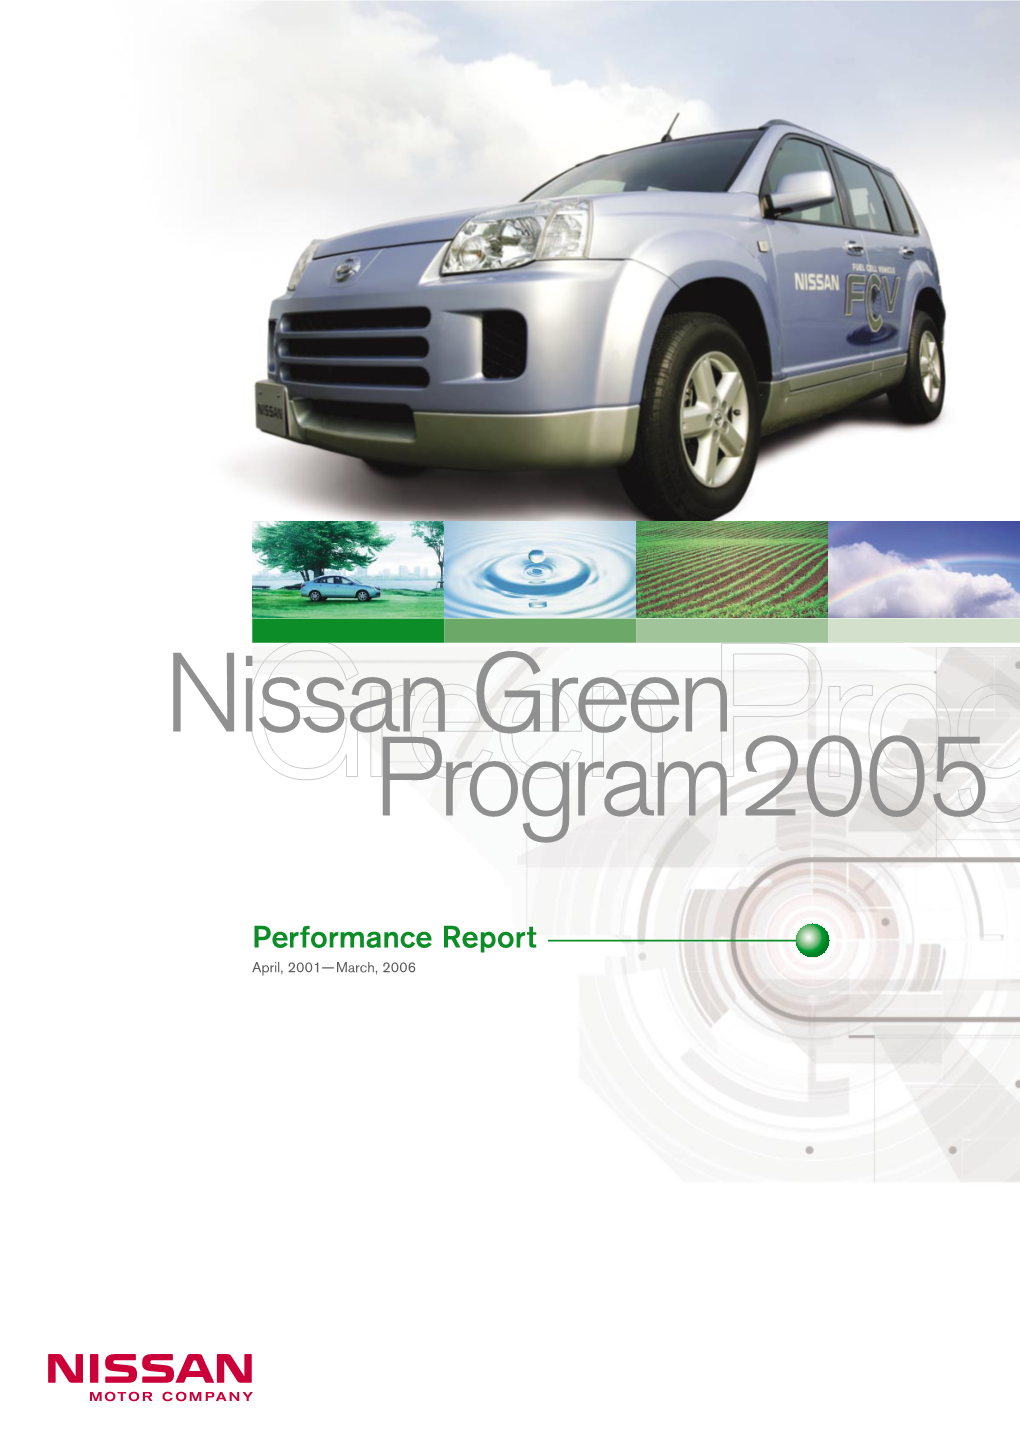 2005 Nissan Green Program